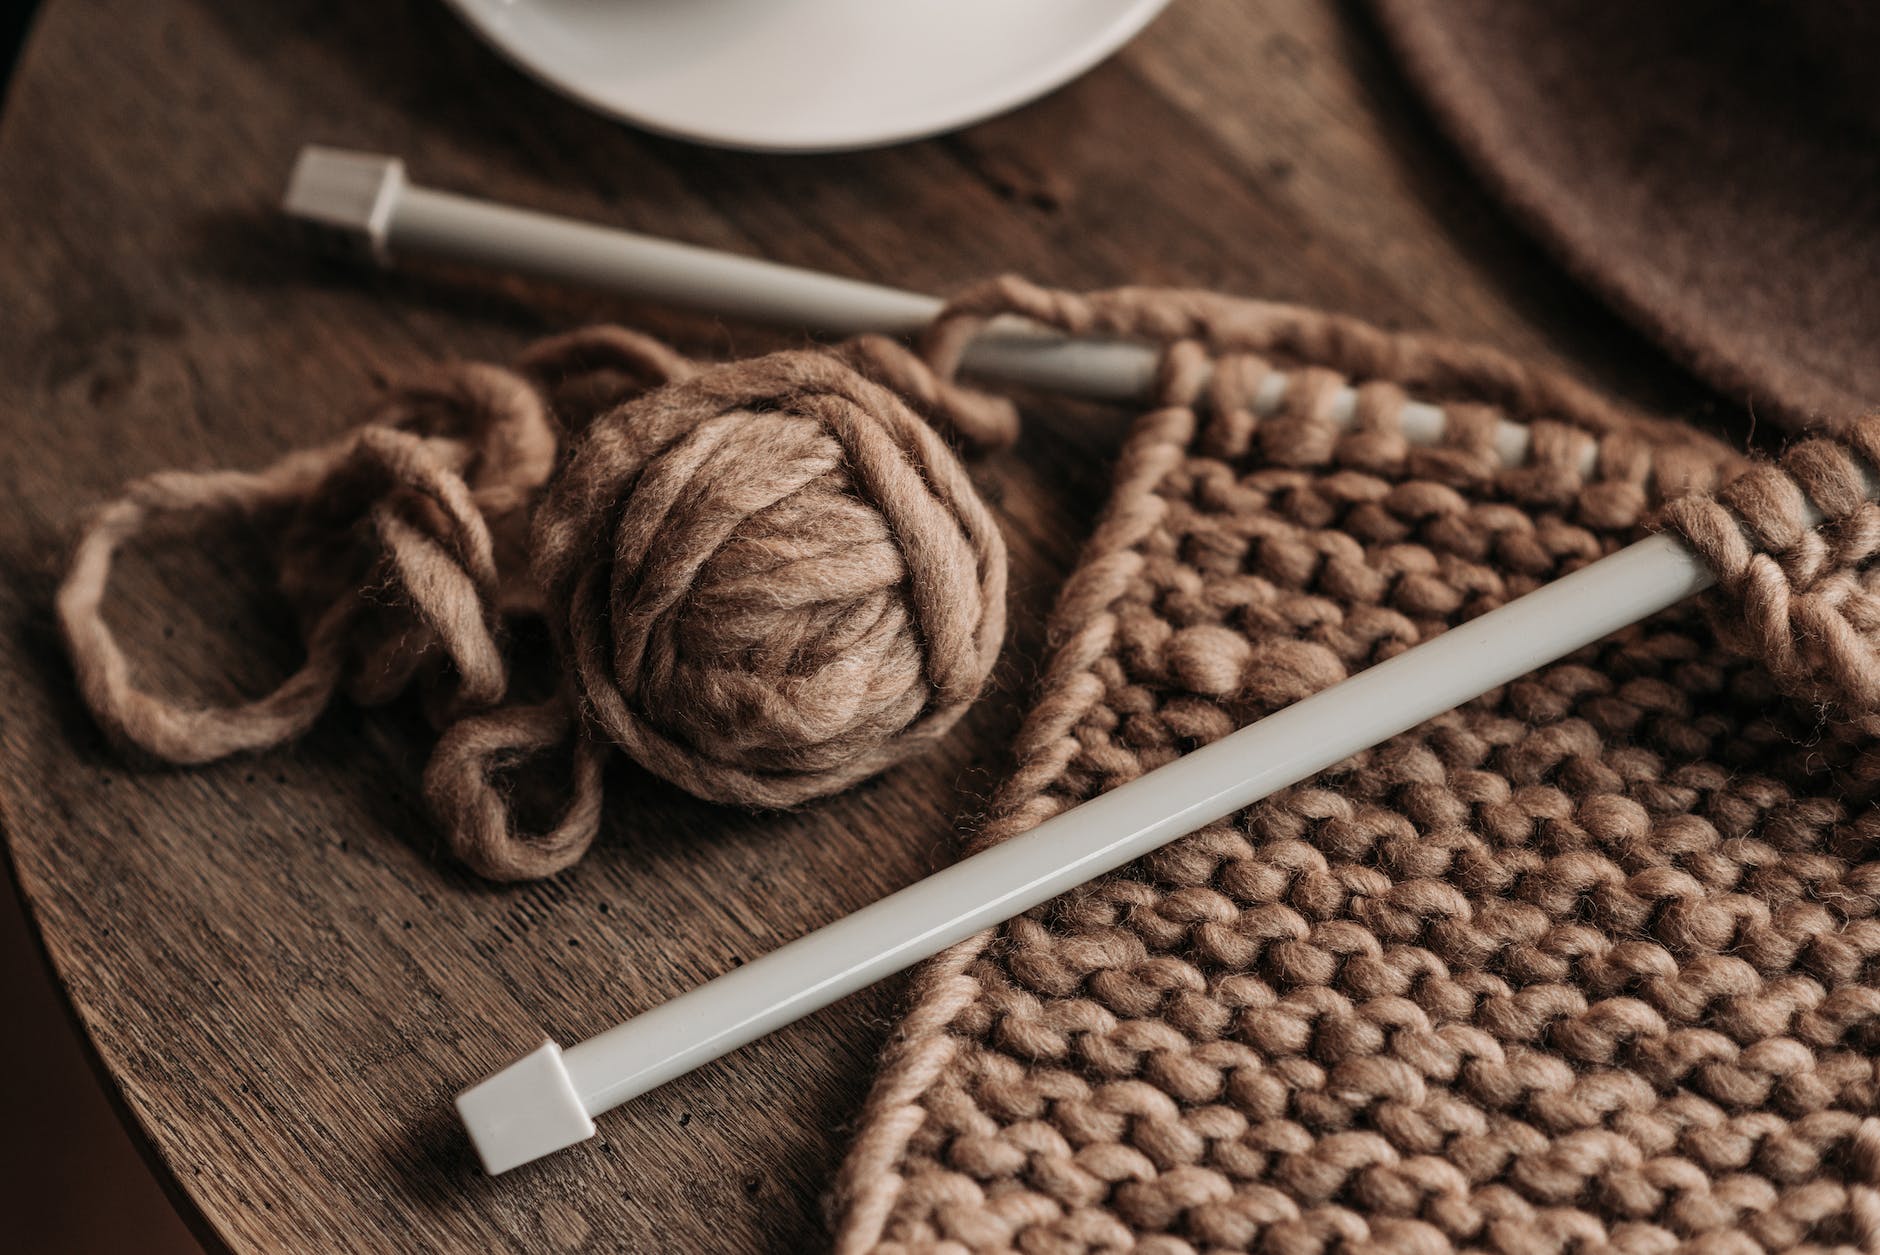 knitting needles on a brown yarn